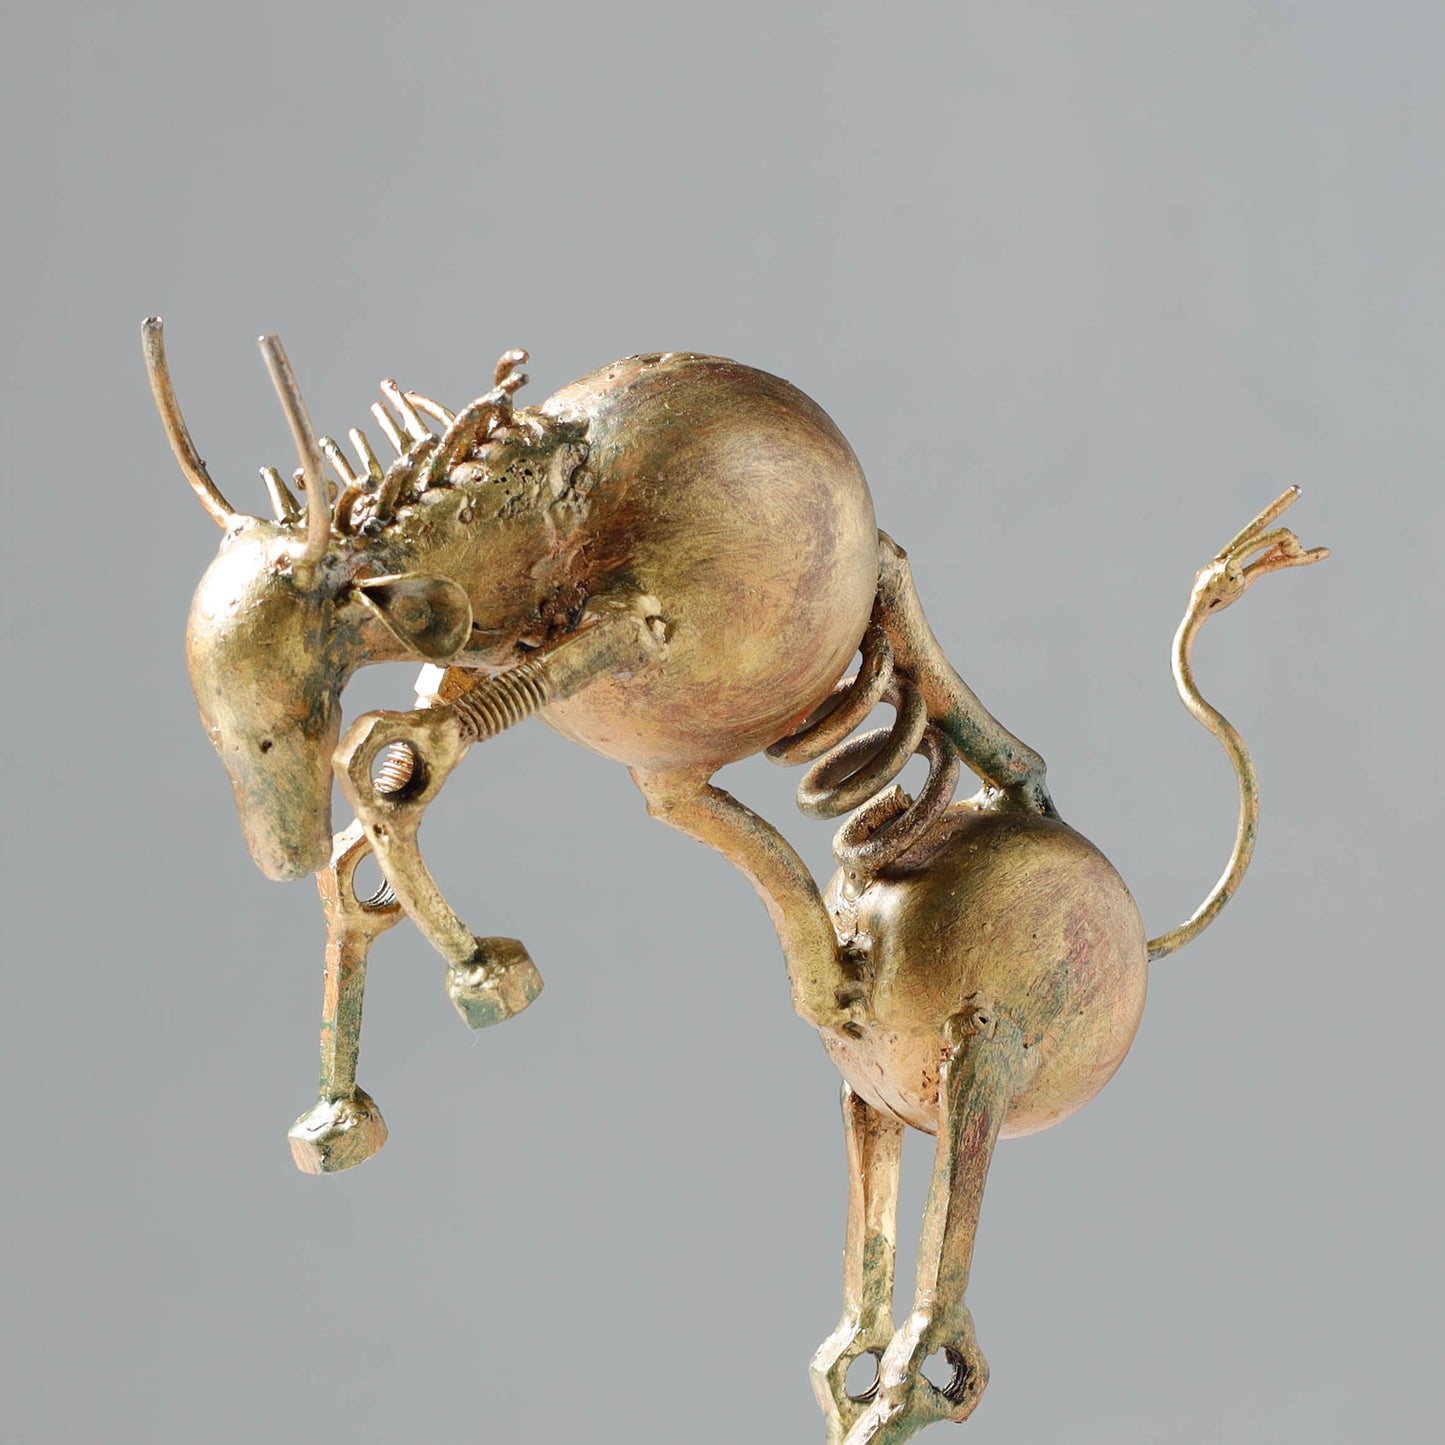 Jumping Bull - Handmade Recycled Metal Sculpture by Debabrata Ruidas